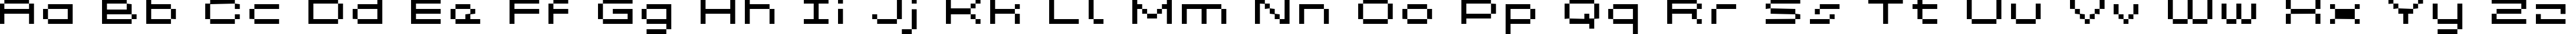 Пример написания английского алфавита шрифтом Grixel Kyrou 5 Wide Xtnd